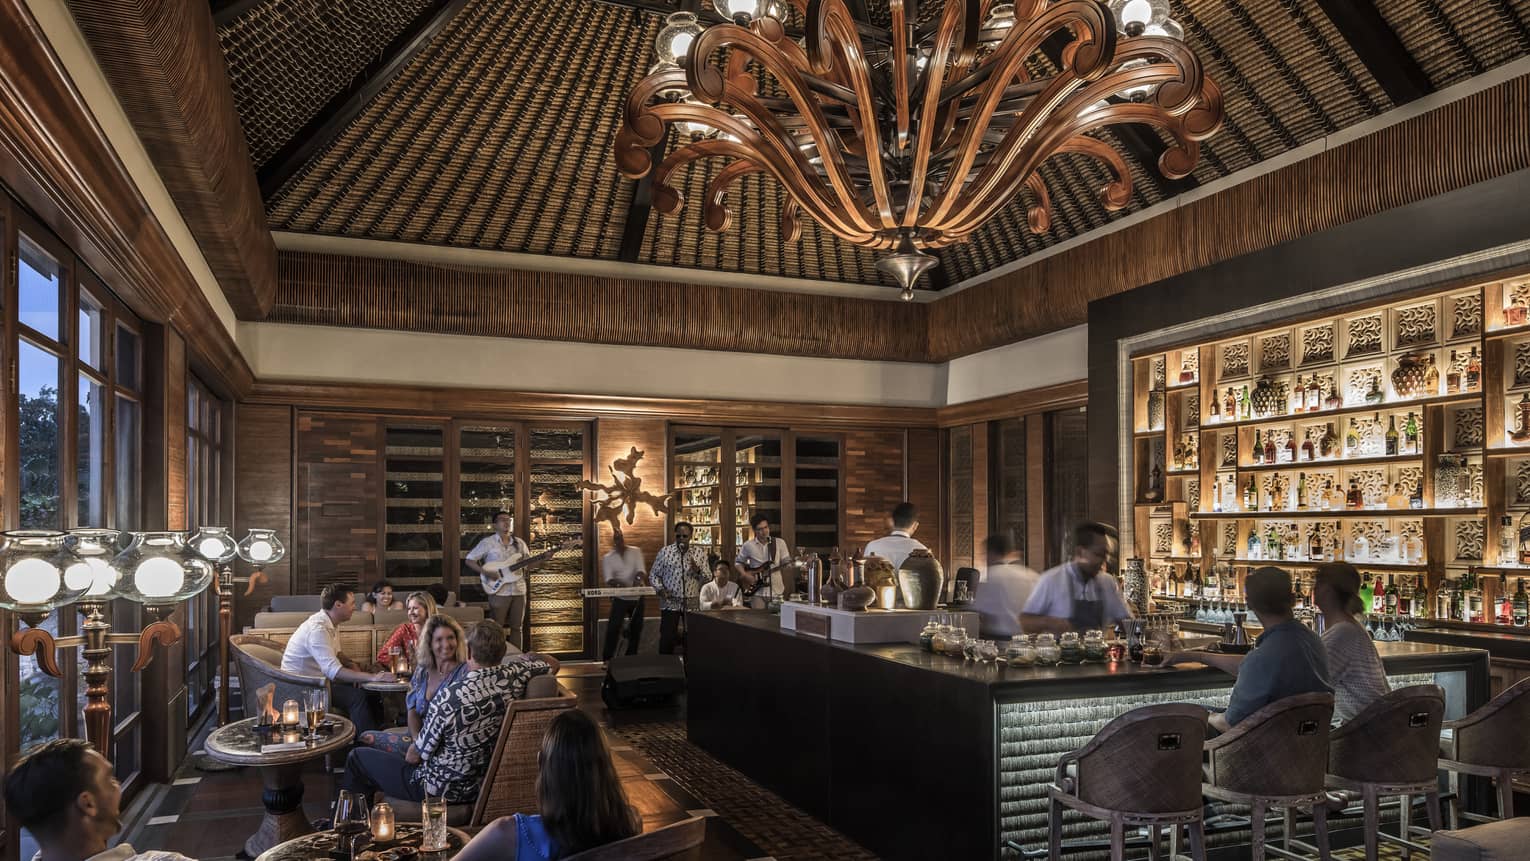 Sundara cocktail lounge, large wood chandelier over guests, bar with lights